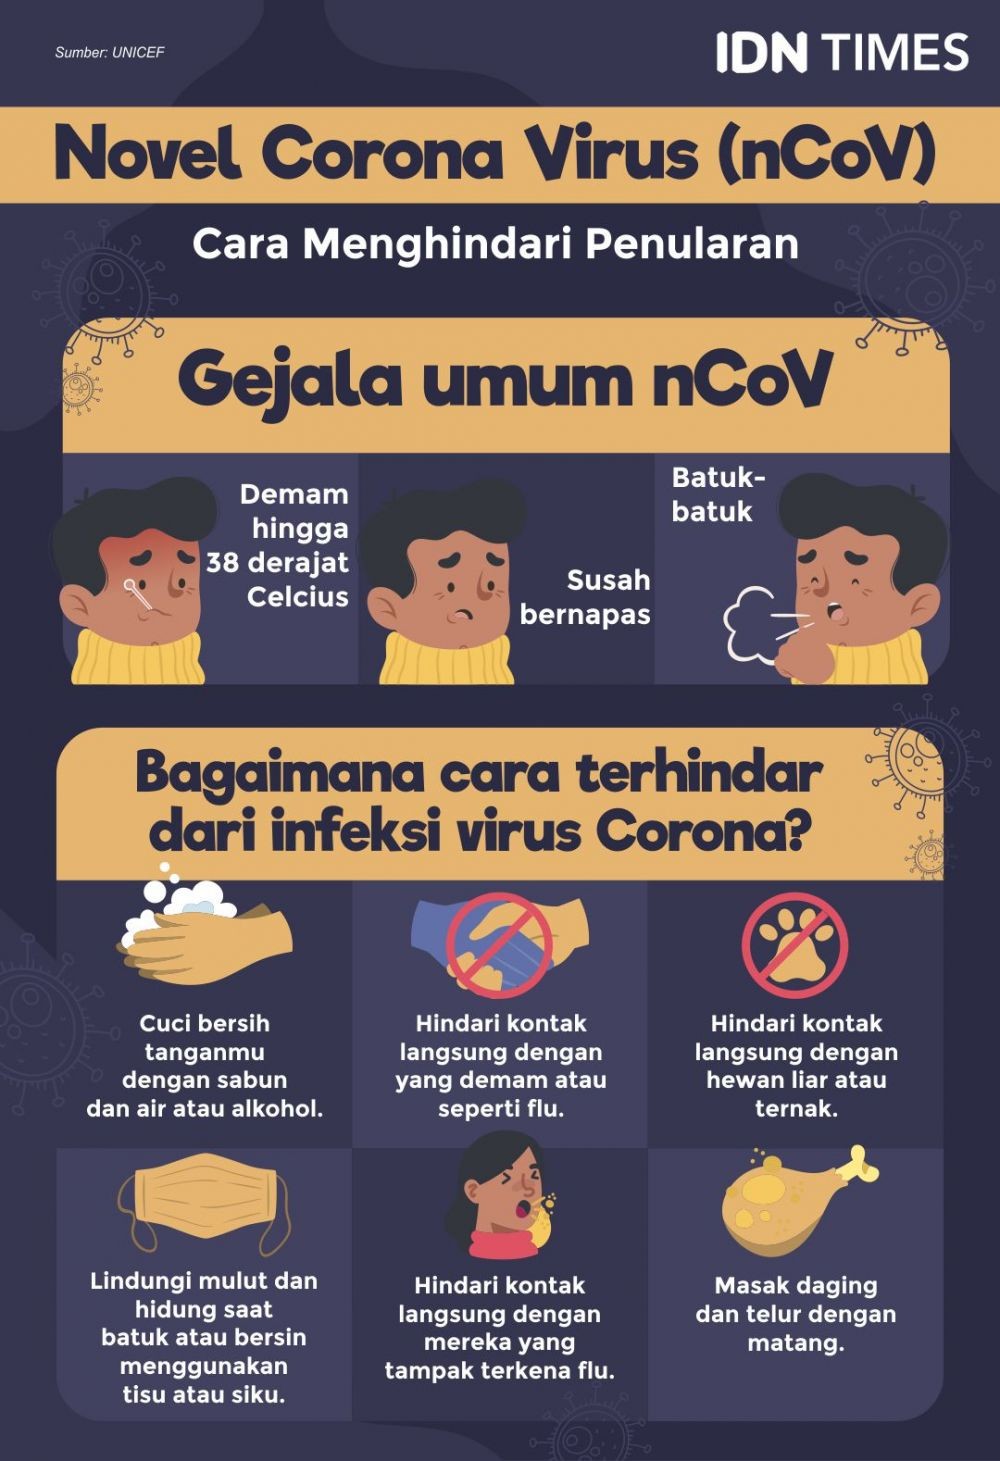 Dua Orang Diduga Terjangkit Virus Corona Diisolasi di RSUD Banyumas